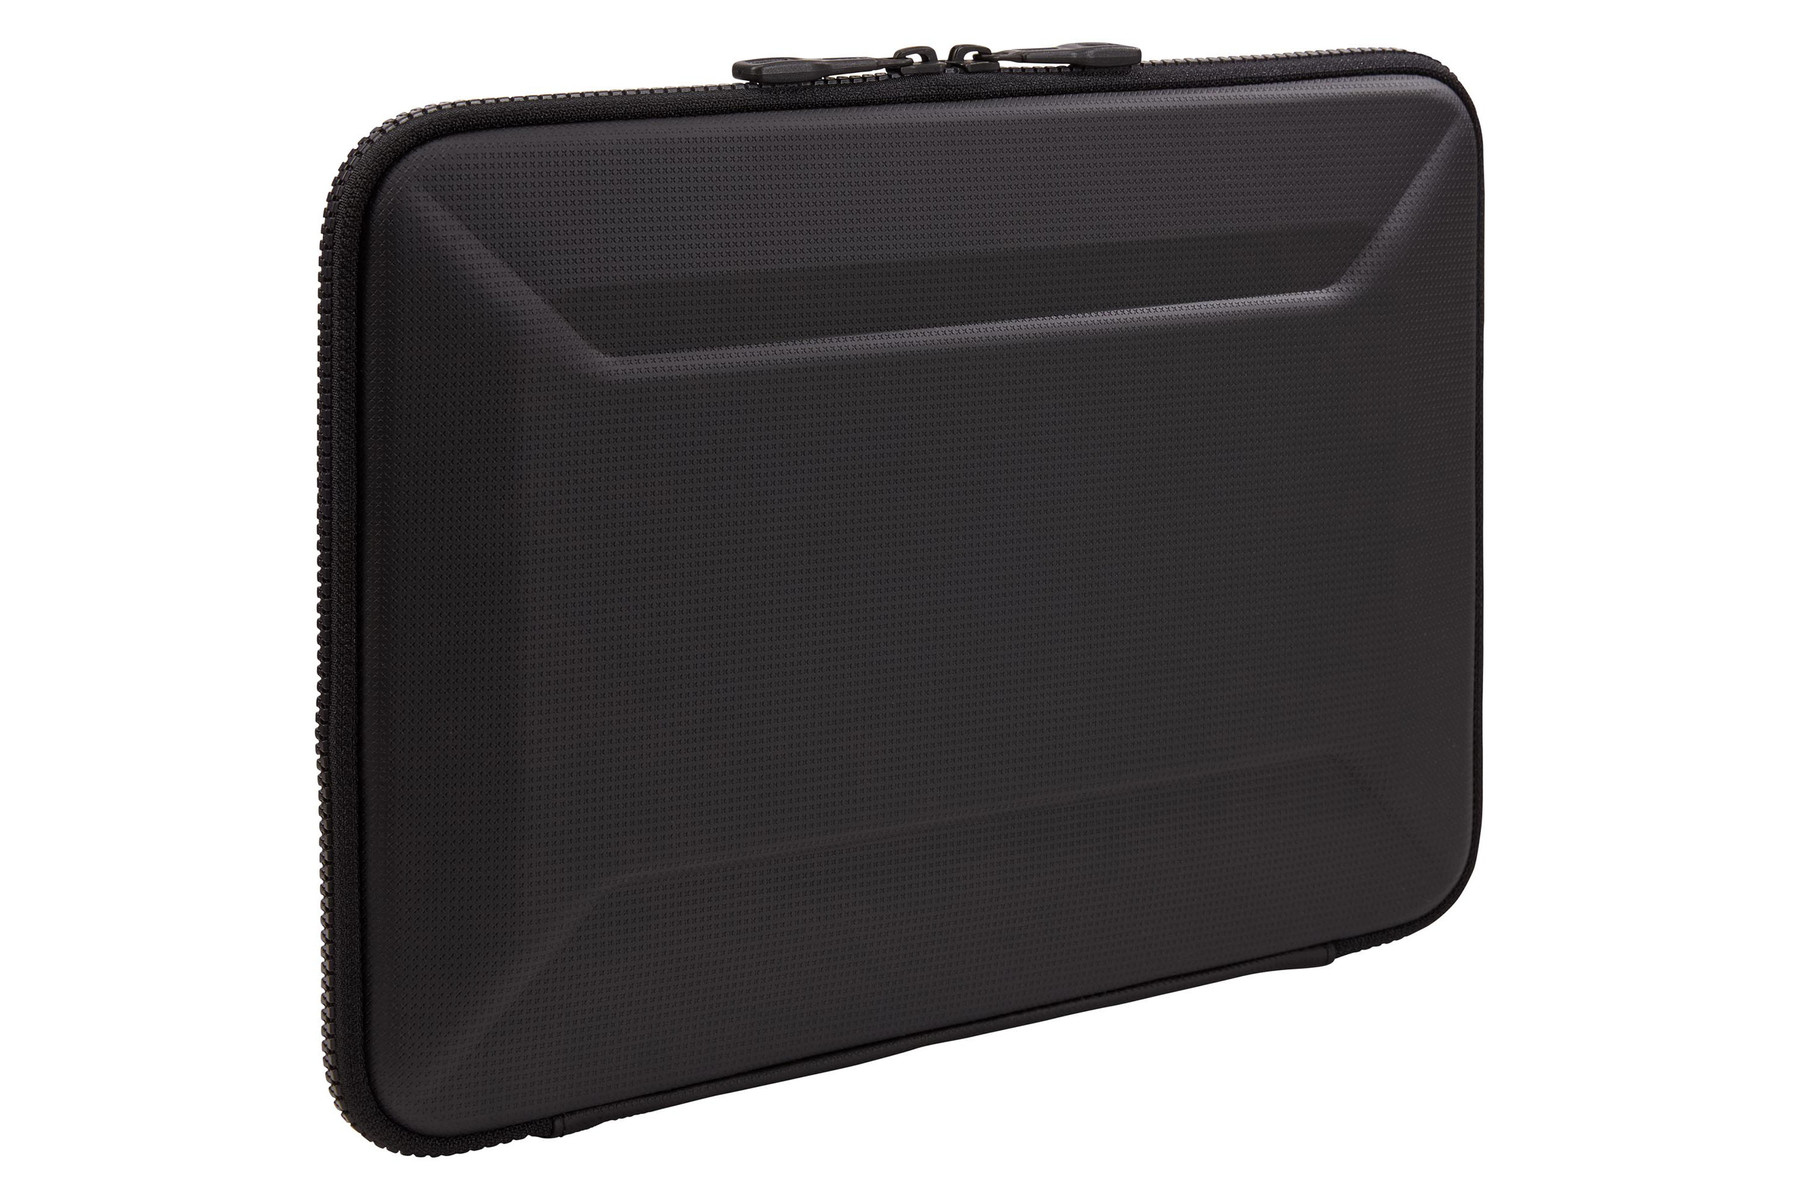 Thule Gauntlet 4.0 TGSE-2357 for MacBook Pro 16&quot; Black Sleeve case